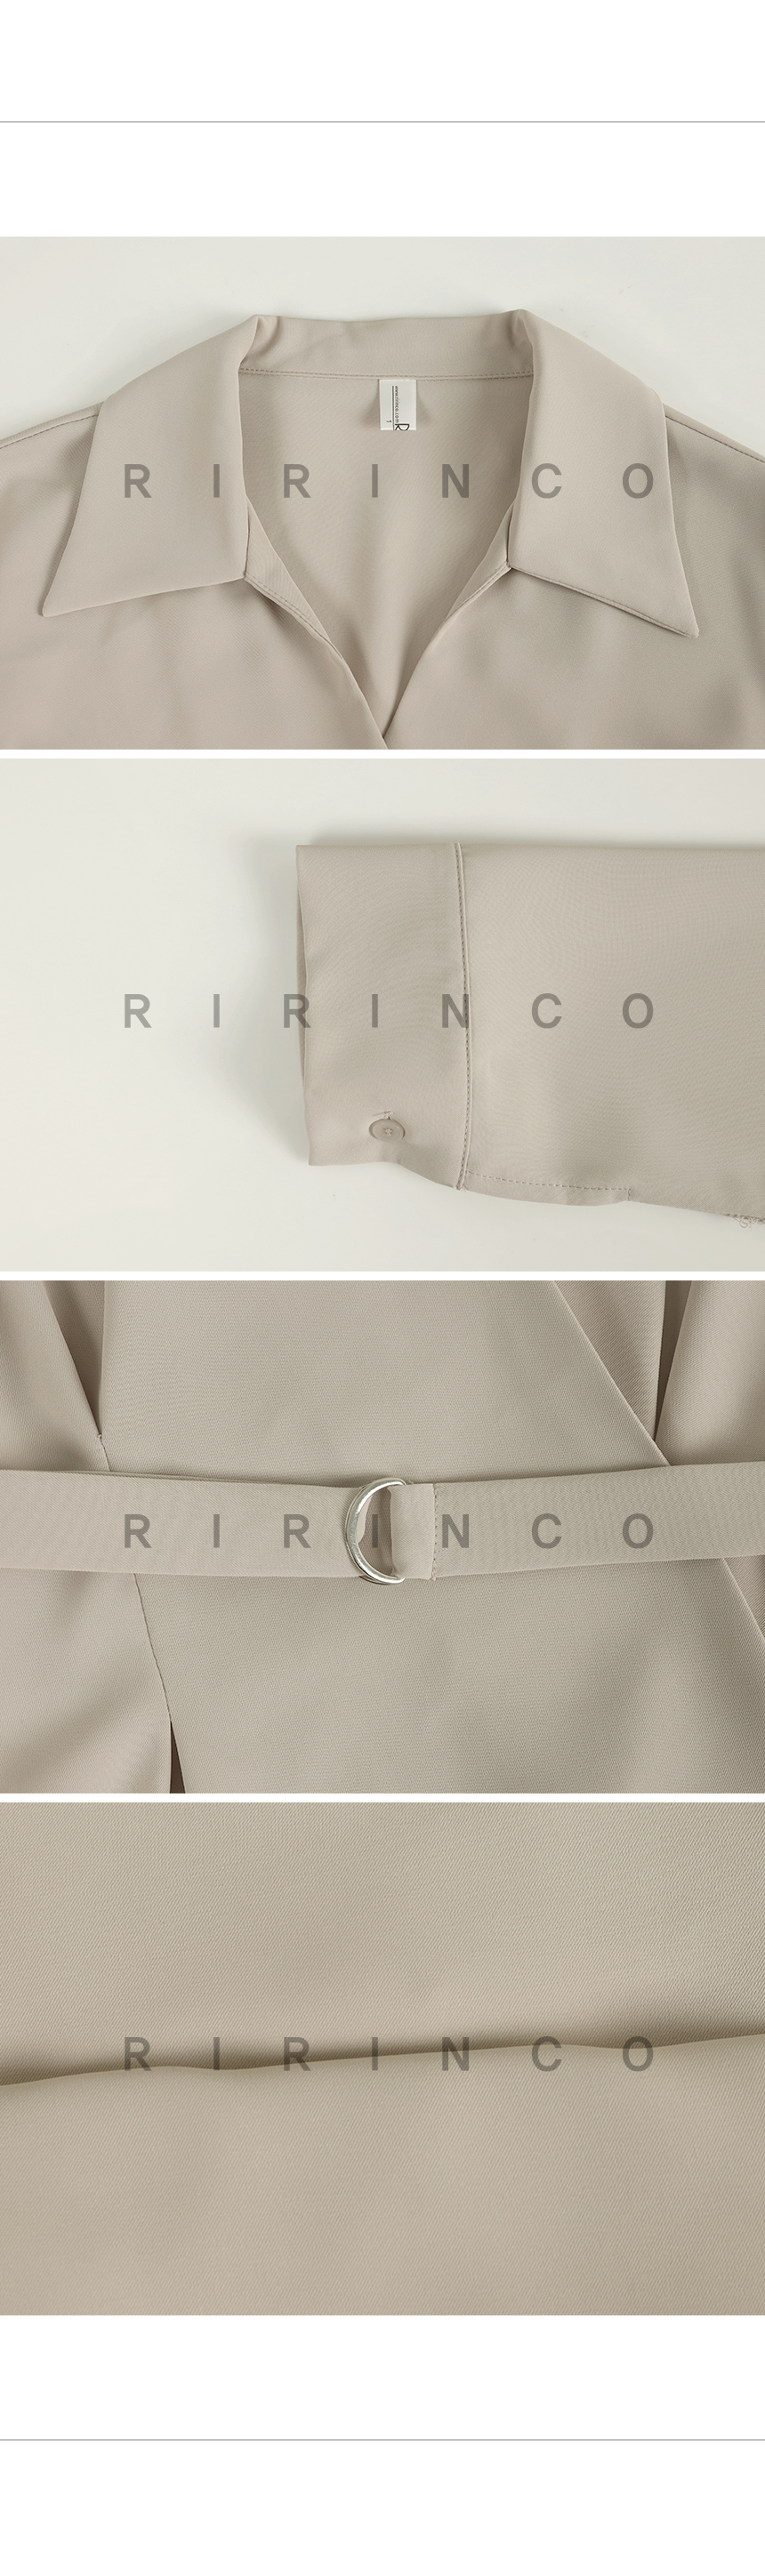 RIRINCO ラップスタイルベルト付き開襟ブラウス